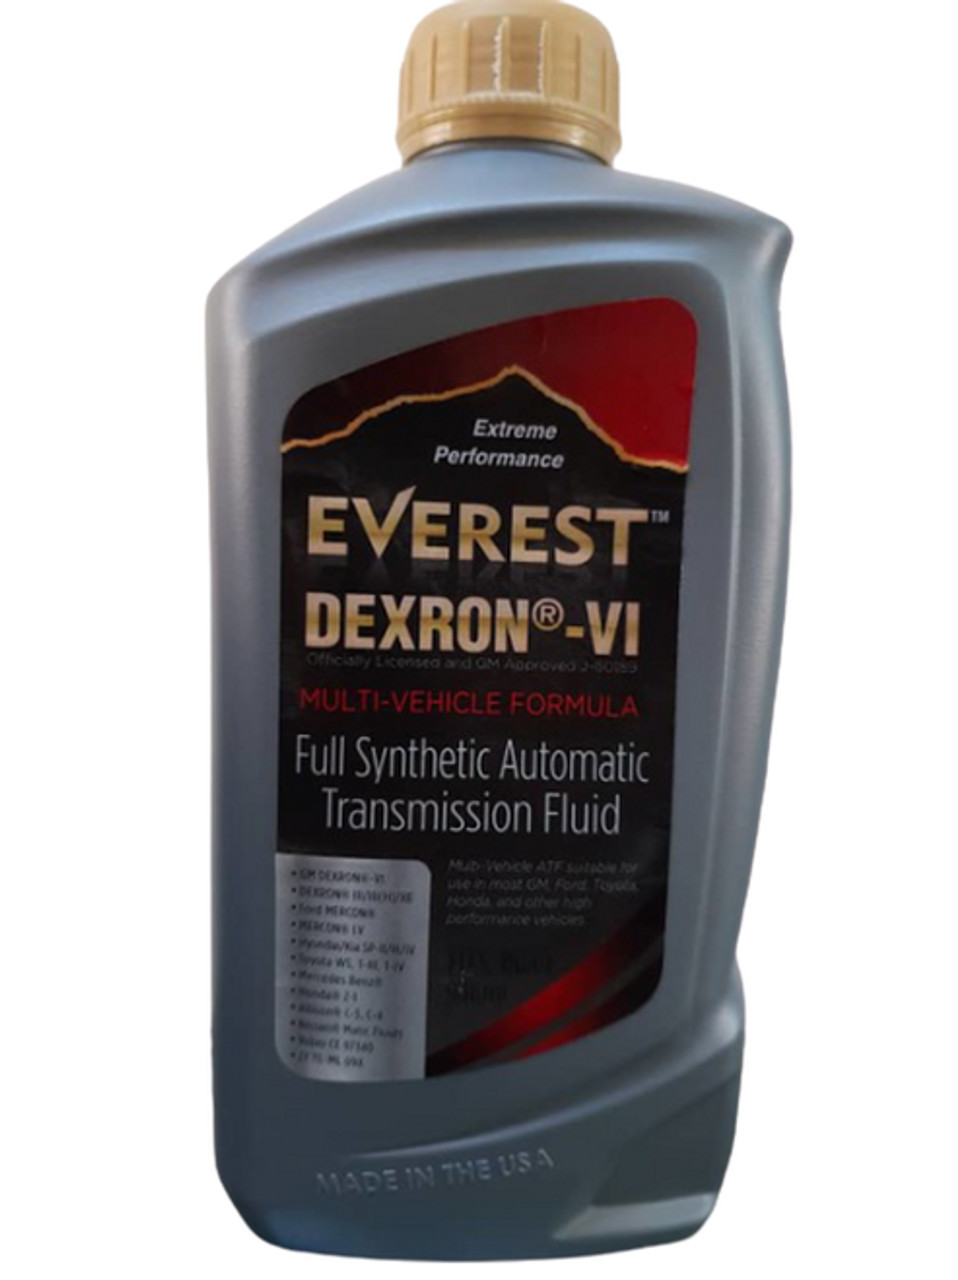 Everest Dexron-VI Full Synthetic ATF Transmission Oil